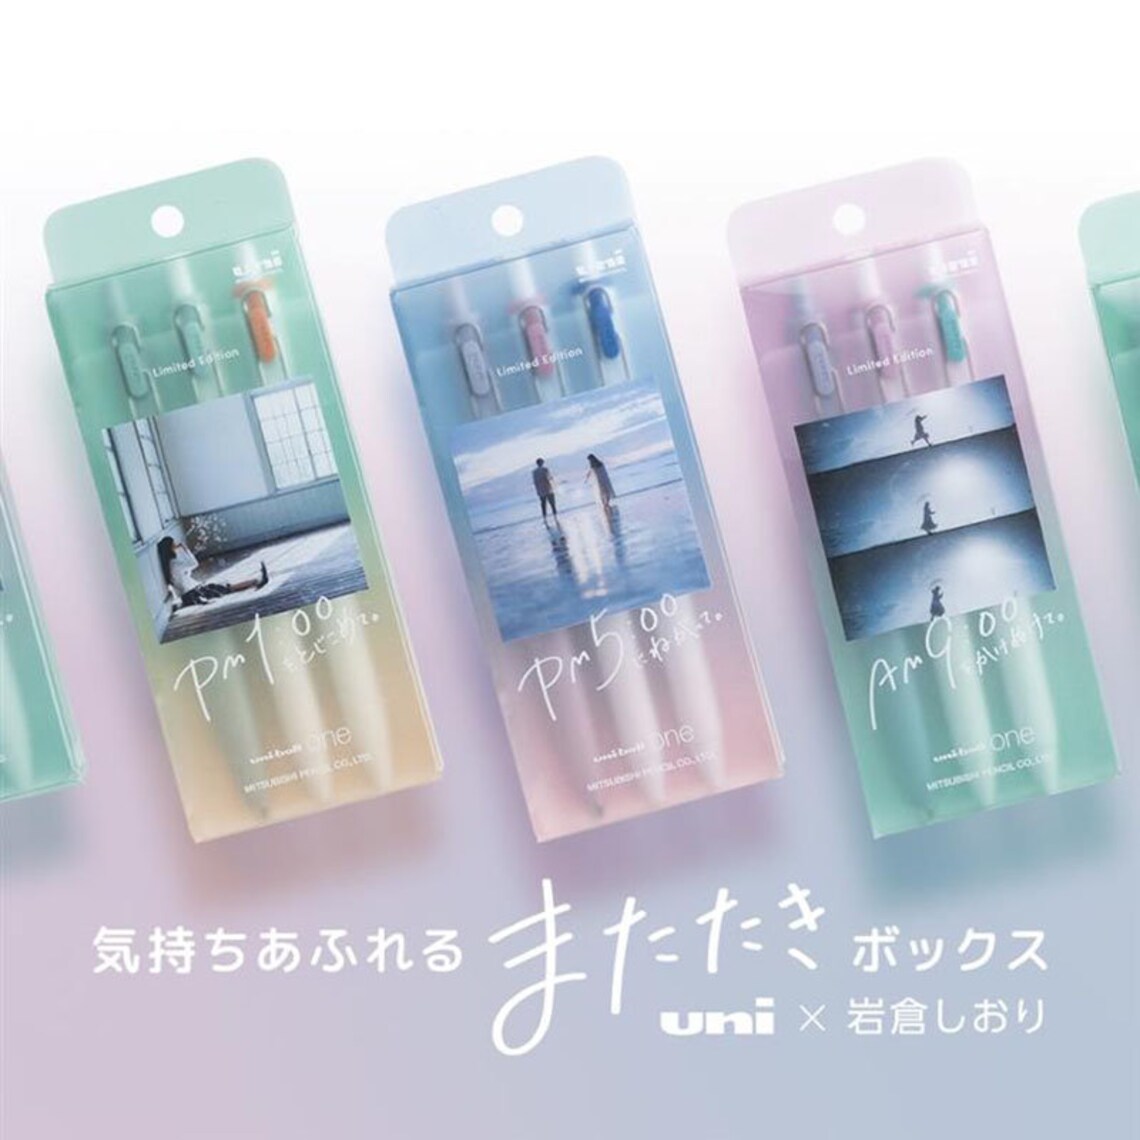 Uni-ball One x Iwakura Shiori (Limited Edition) Sets of 3 Gel Pens